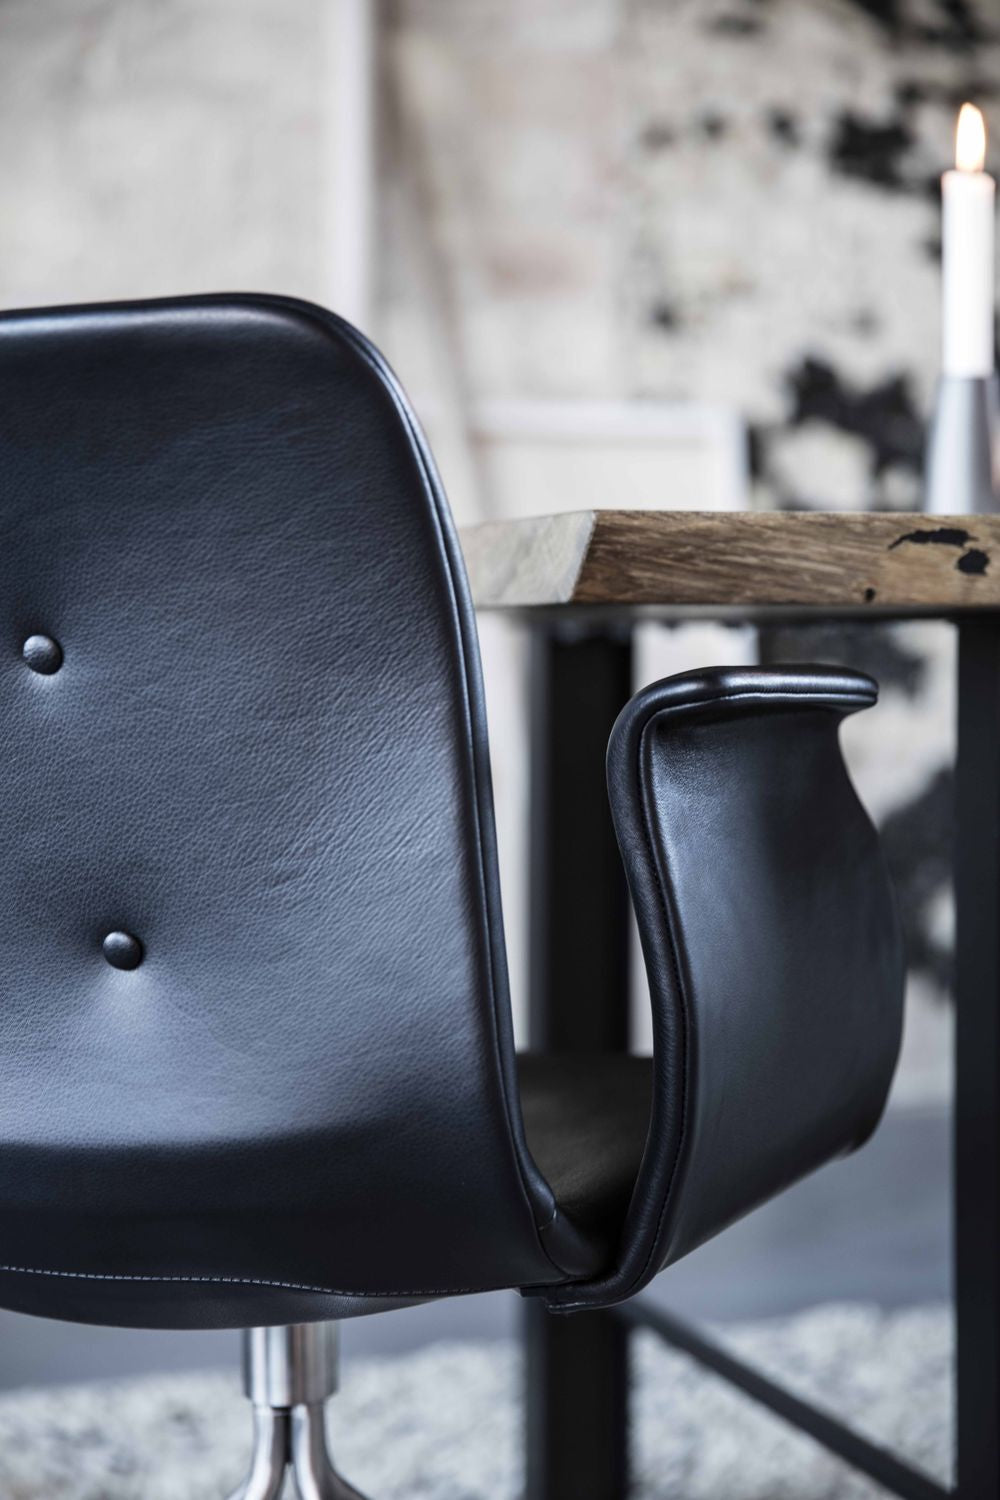 Bent Hansen Primum Chair With Armrests Black Wheel Frame, Black Zenso Leather